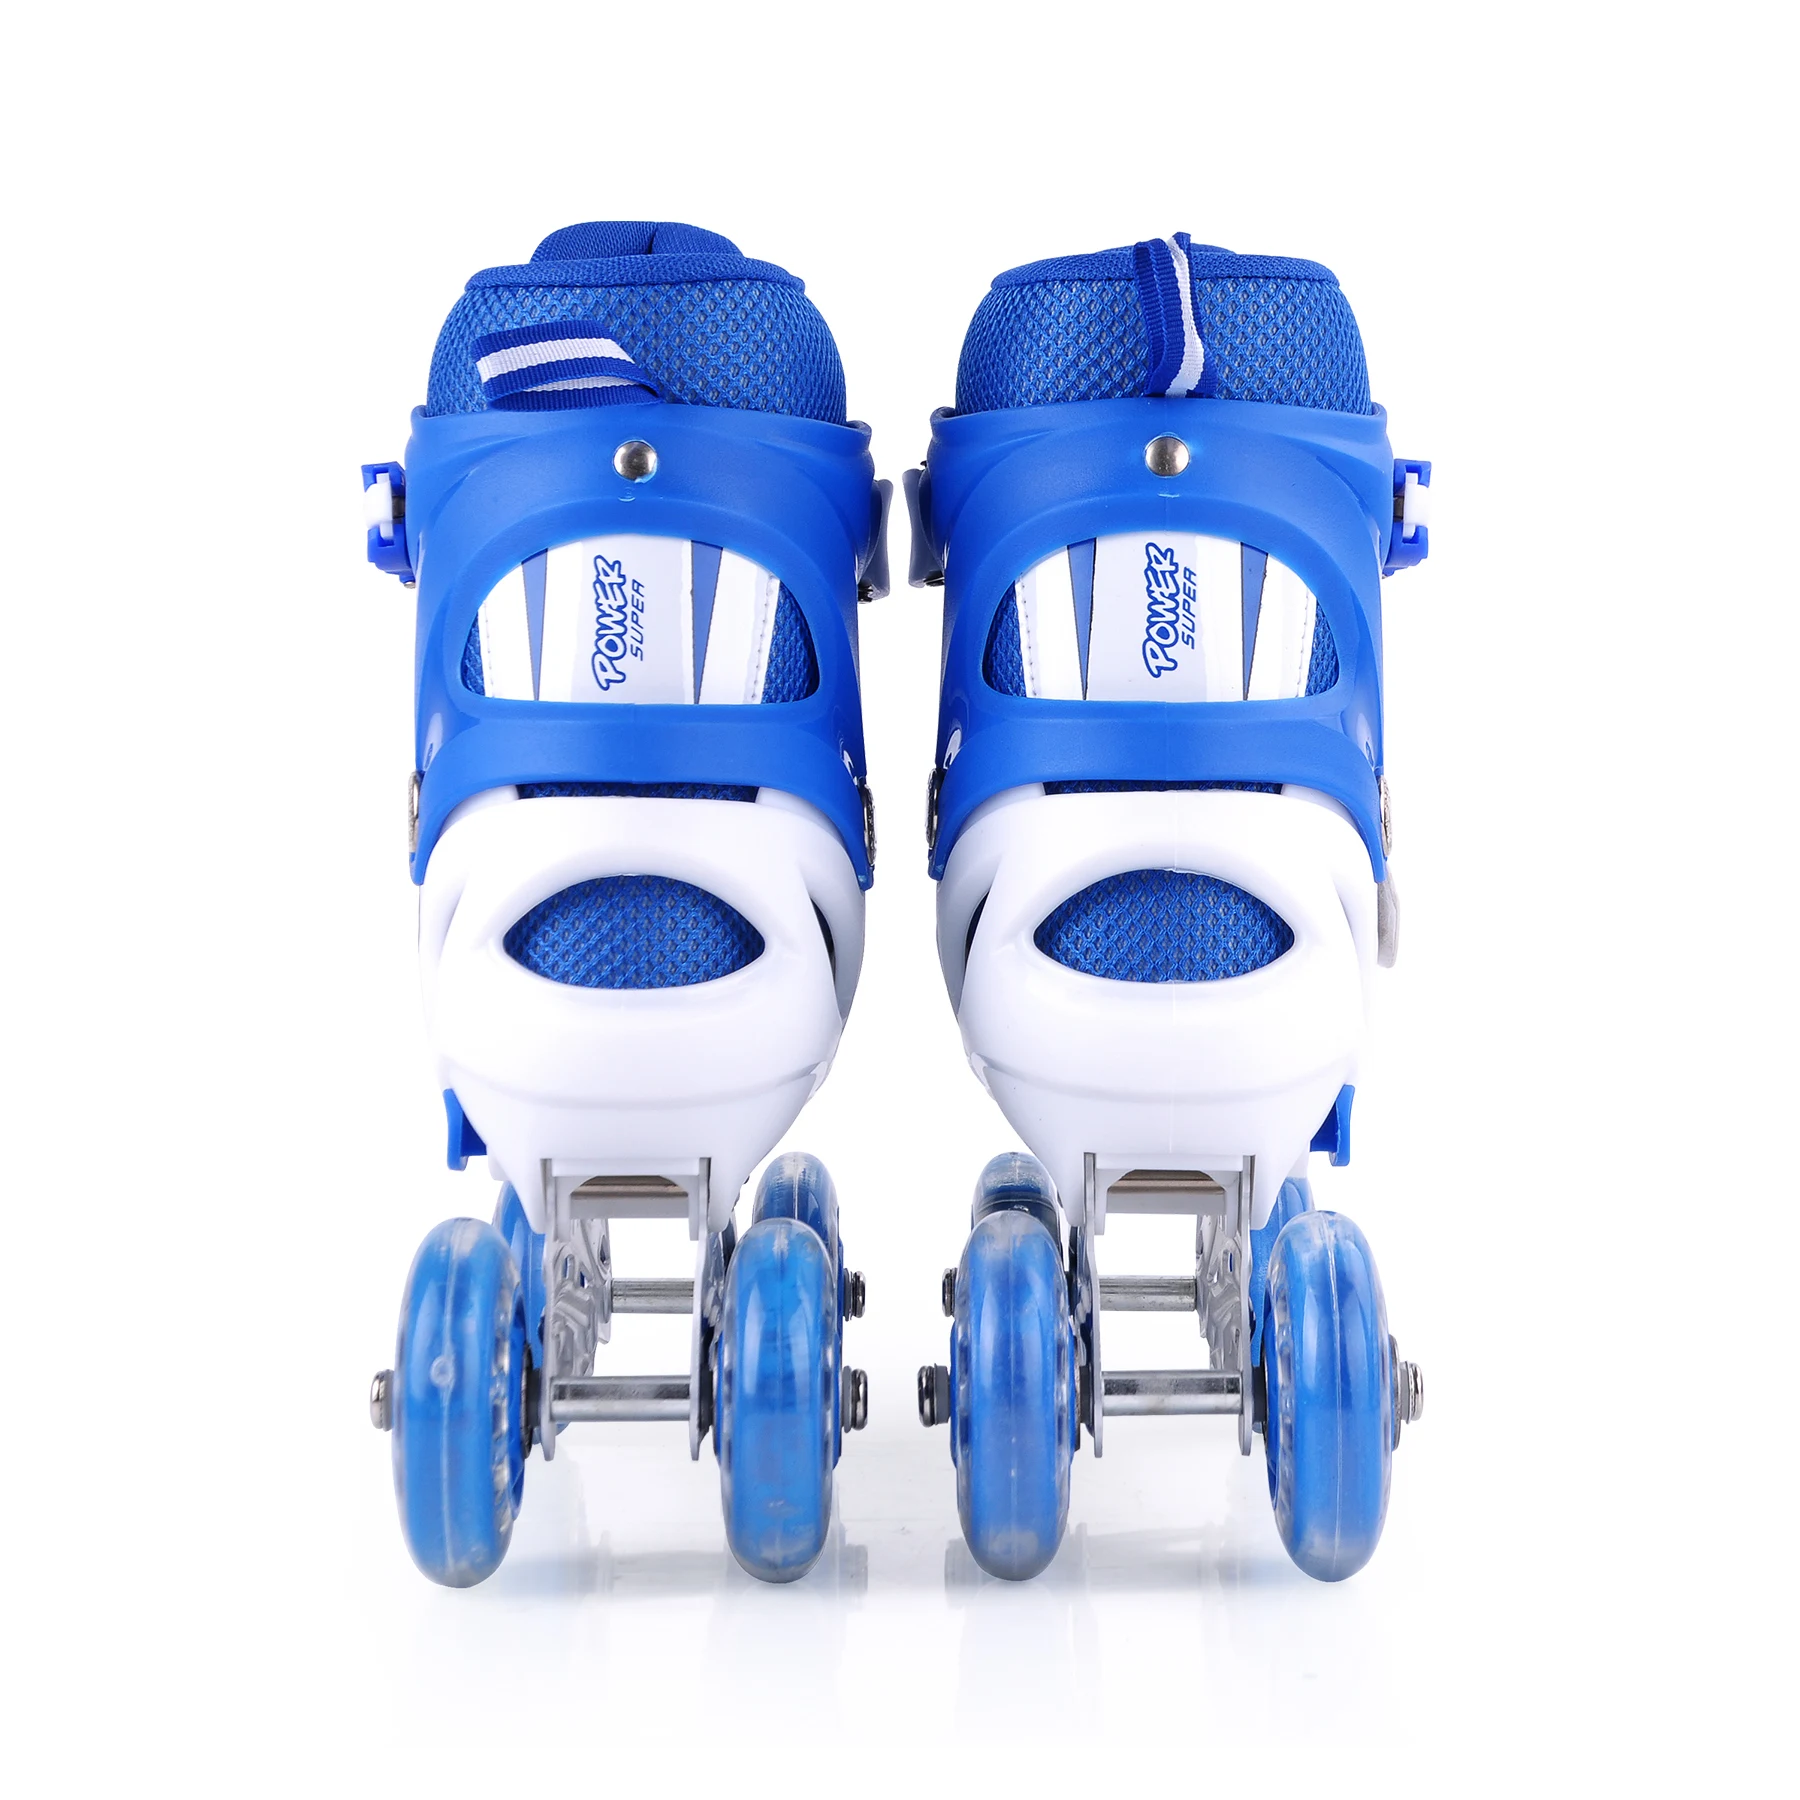 PAPAISON PU/PVC 4 wheels roller skates adjustable roller inline skate speed skate shoes